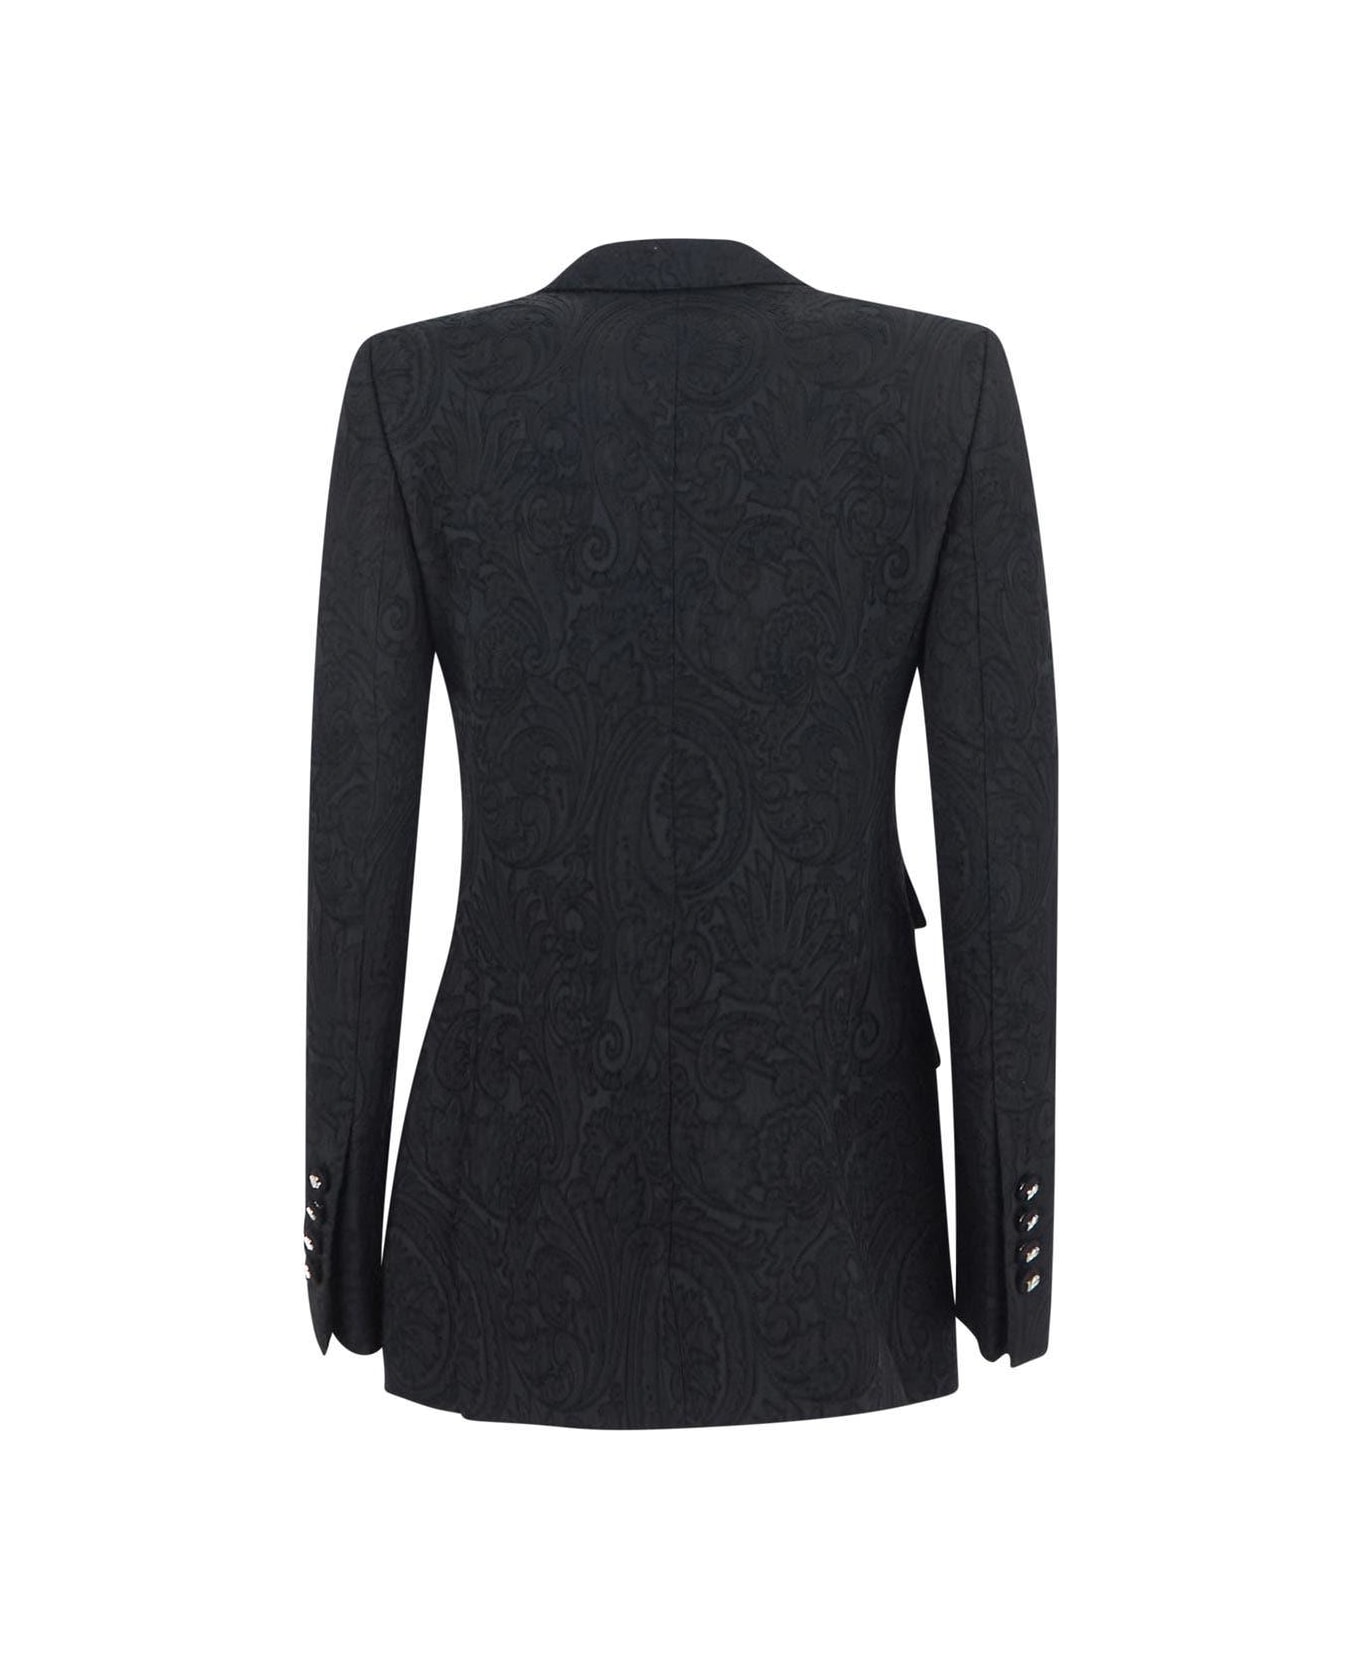 Dolce & Gabbana Embroidered Paisley Jacket